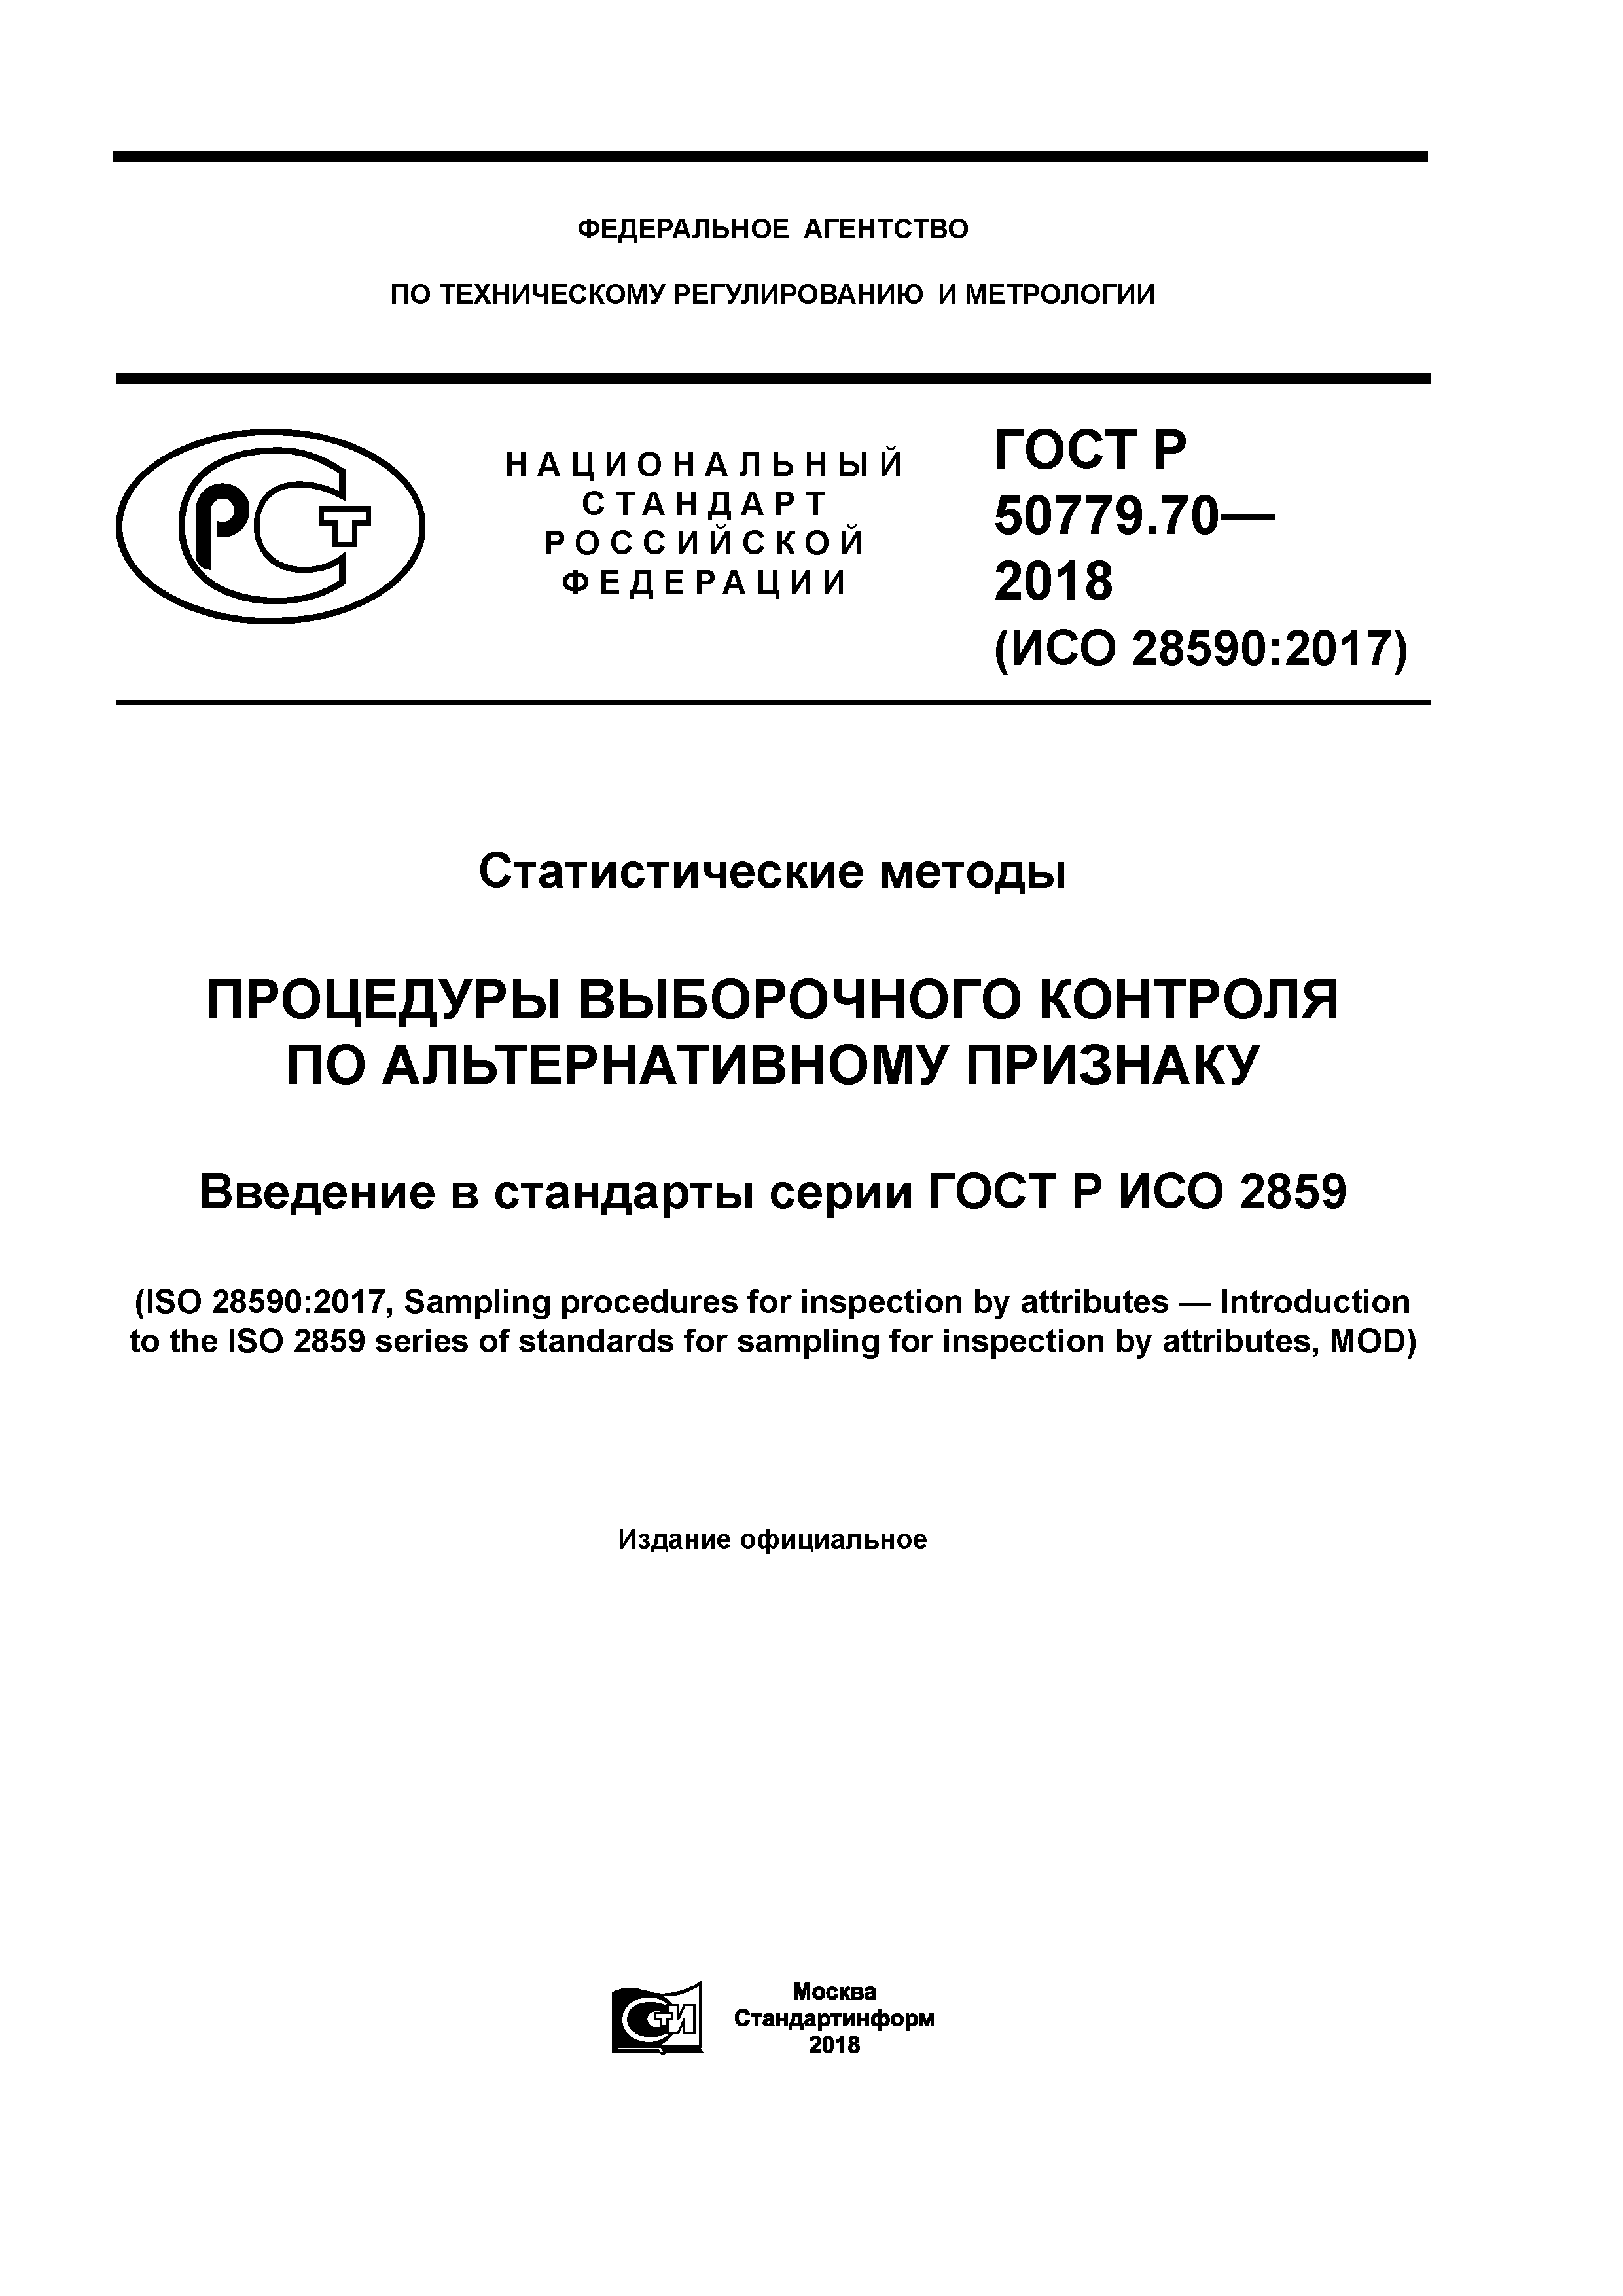 ГОСТ Р 50779.70-2018